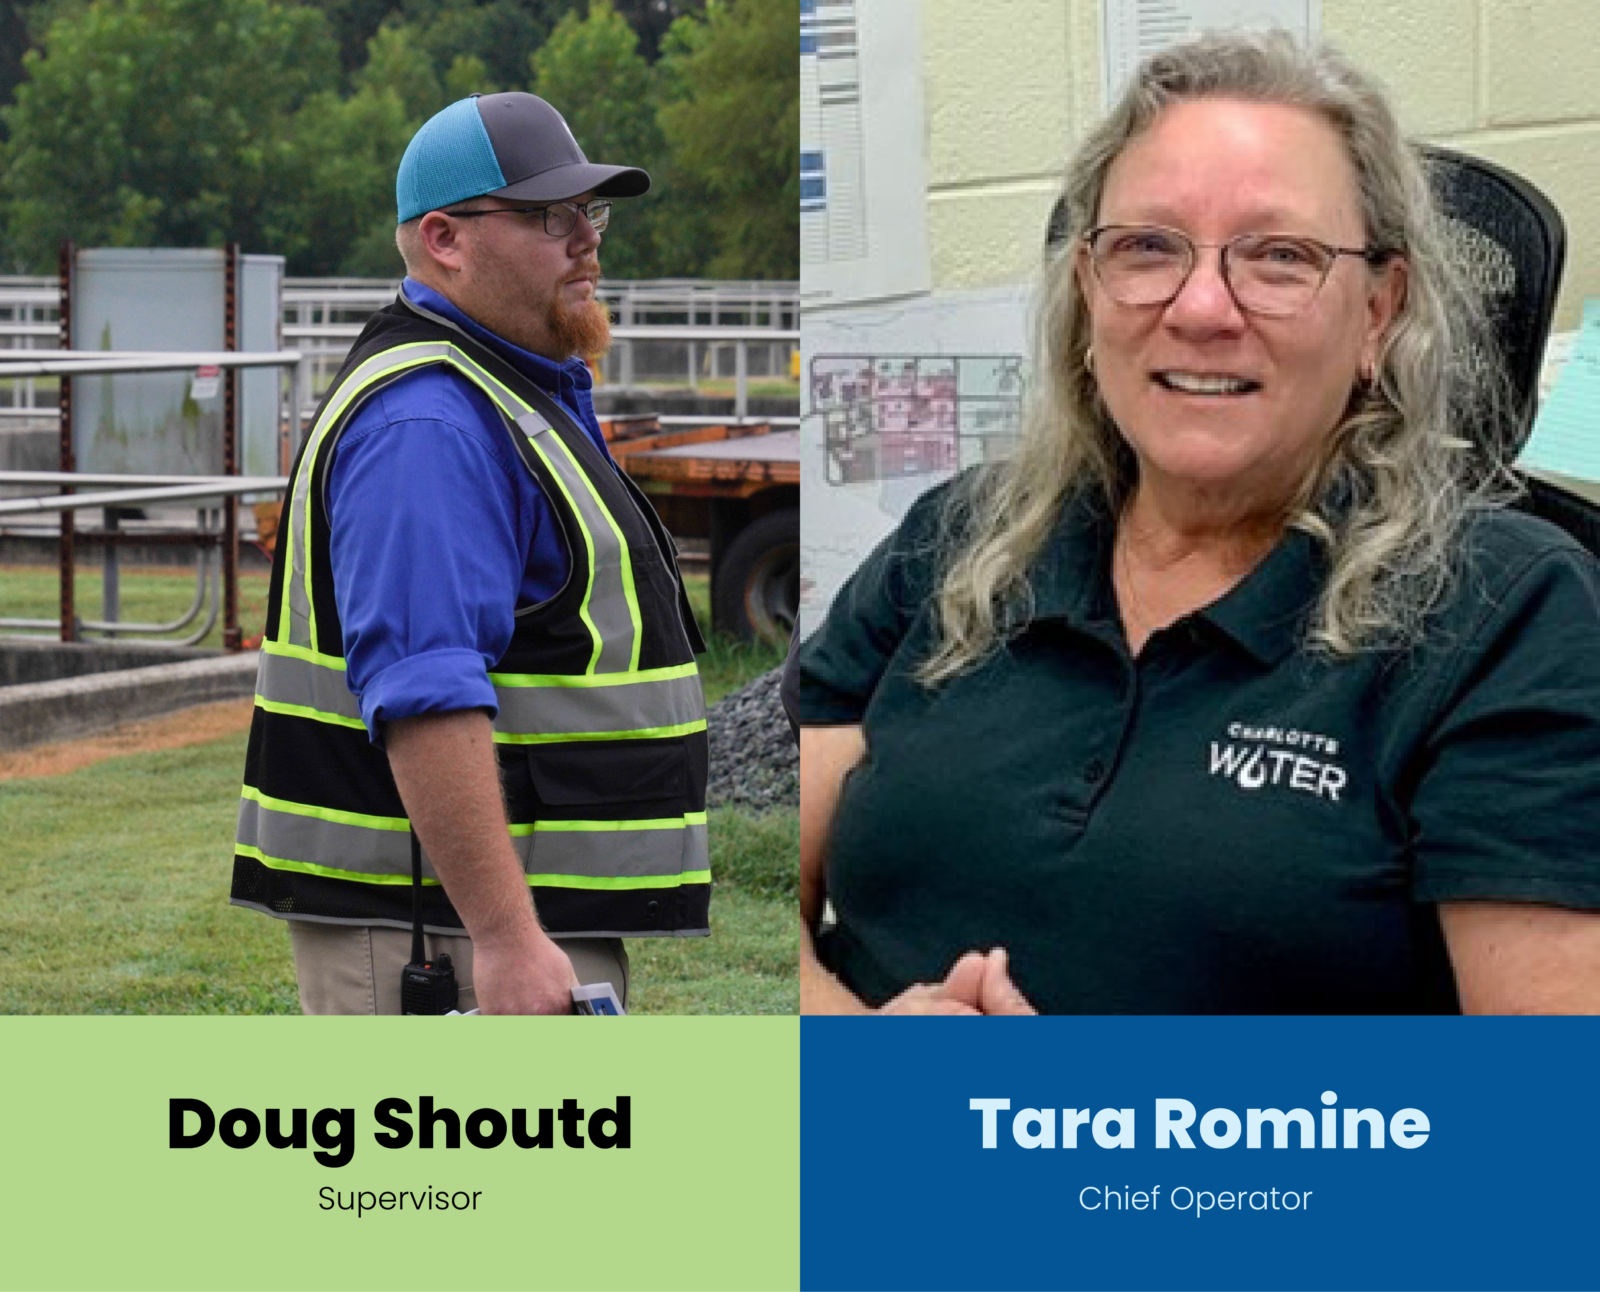 Doug Shoutd, Supervisor and Tara Romine, Chief Operator